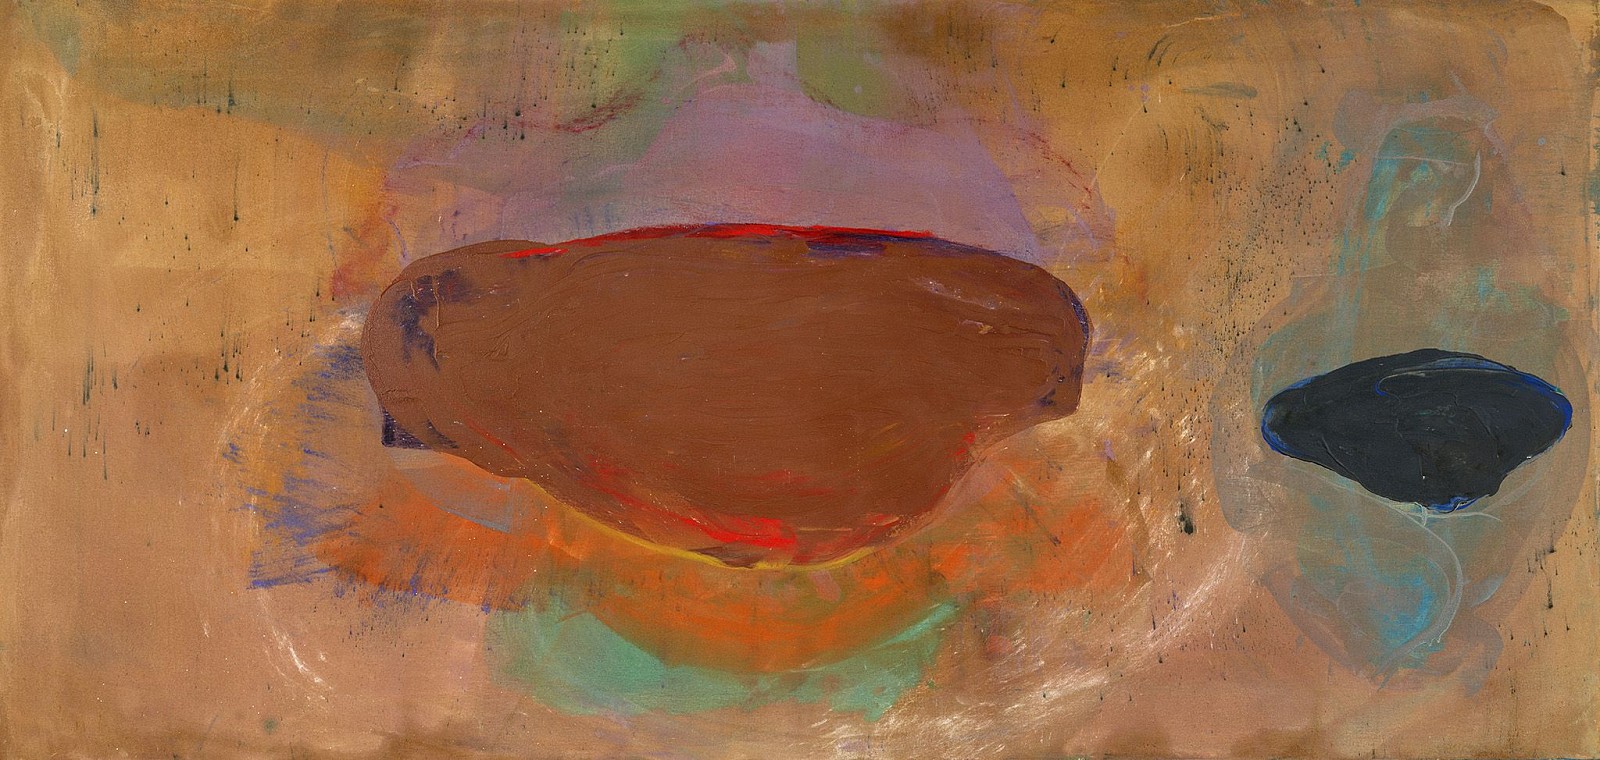 Stephen Mueller, False Retreat, 1979
Acrylic on canvas, 43 x 90 in. (109.2 x 228.6 cm)
MUE-00001